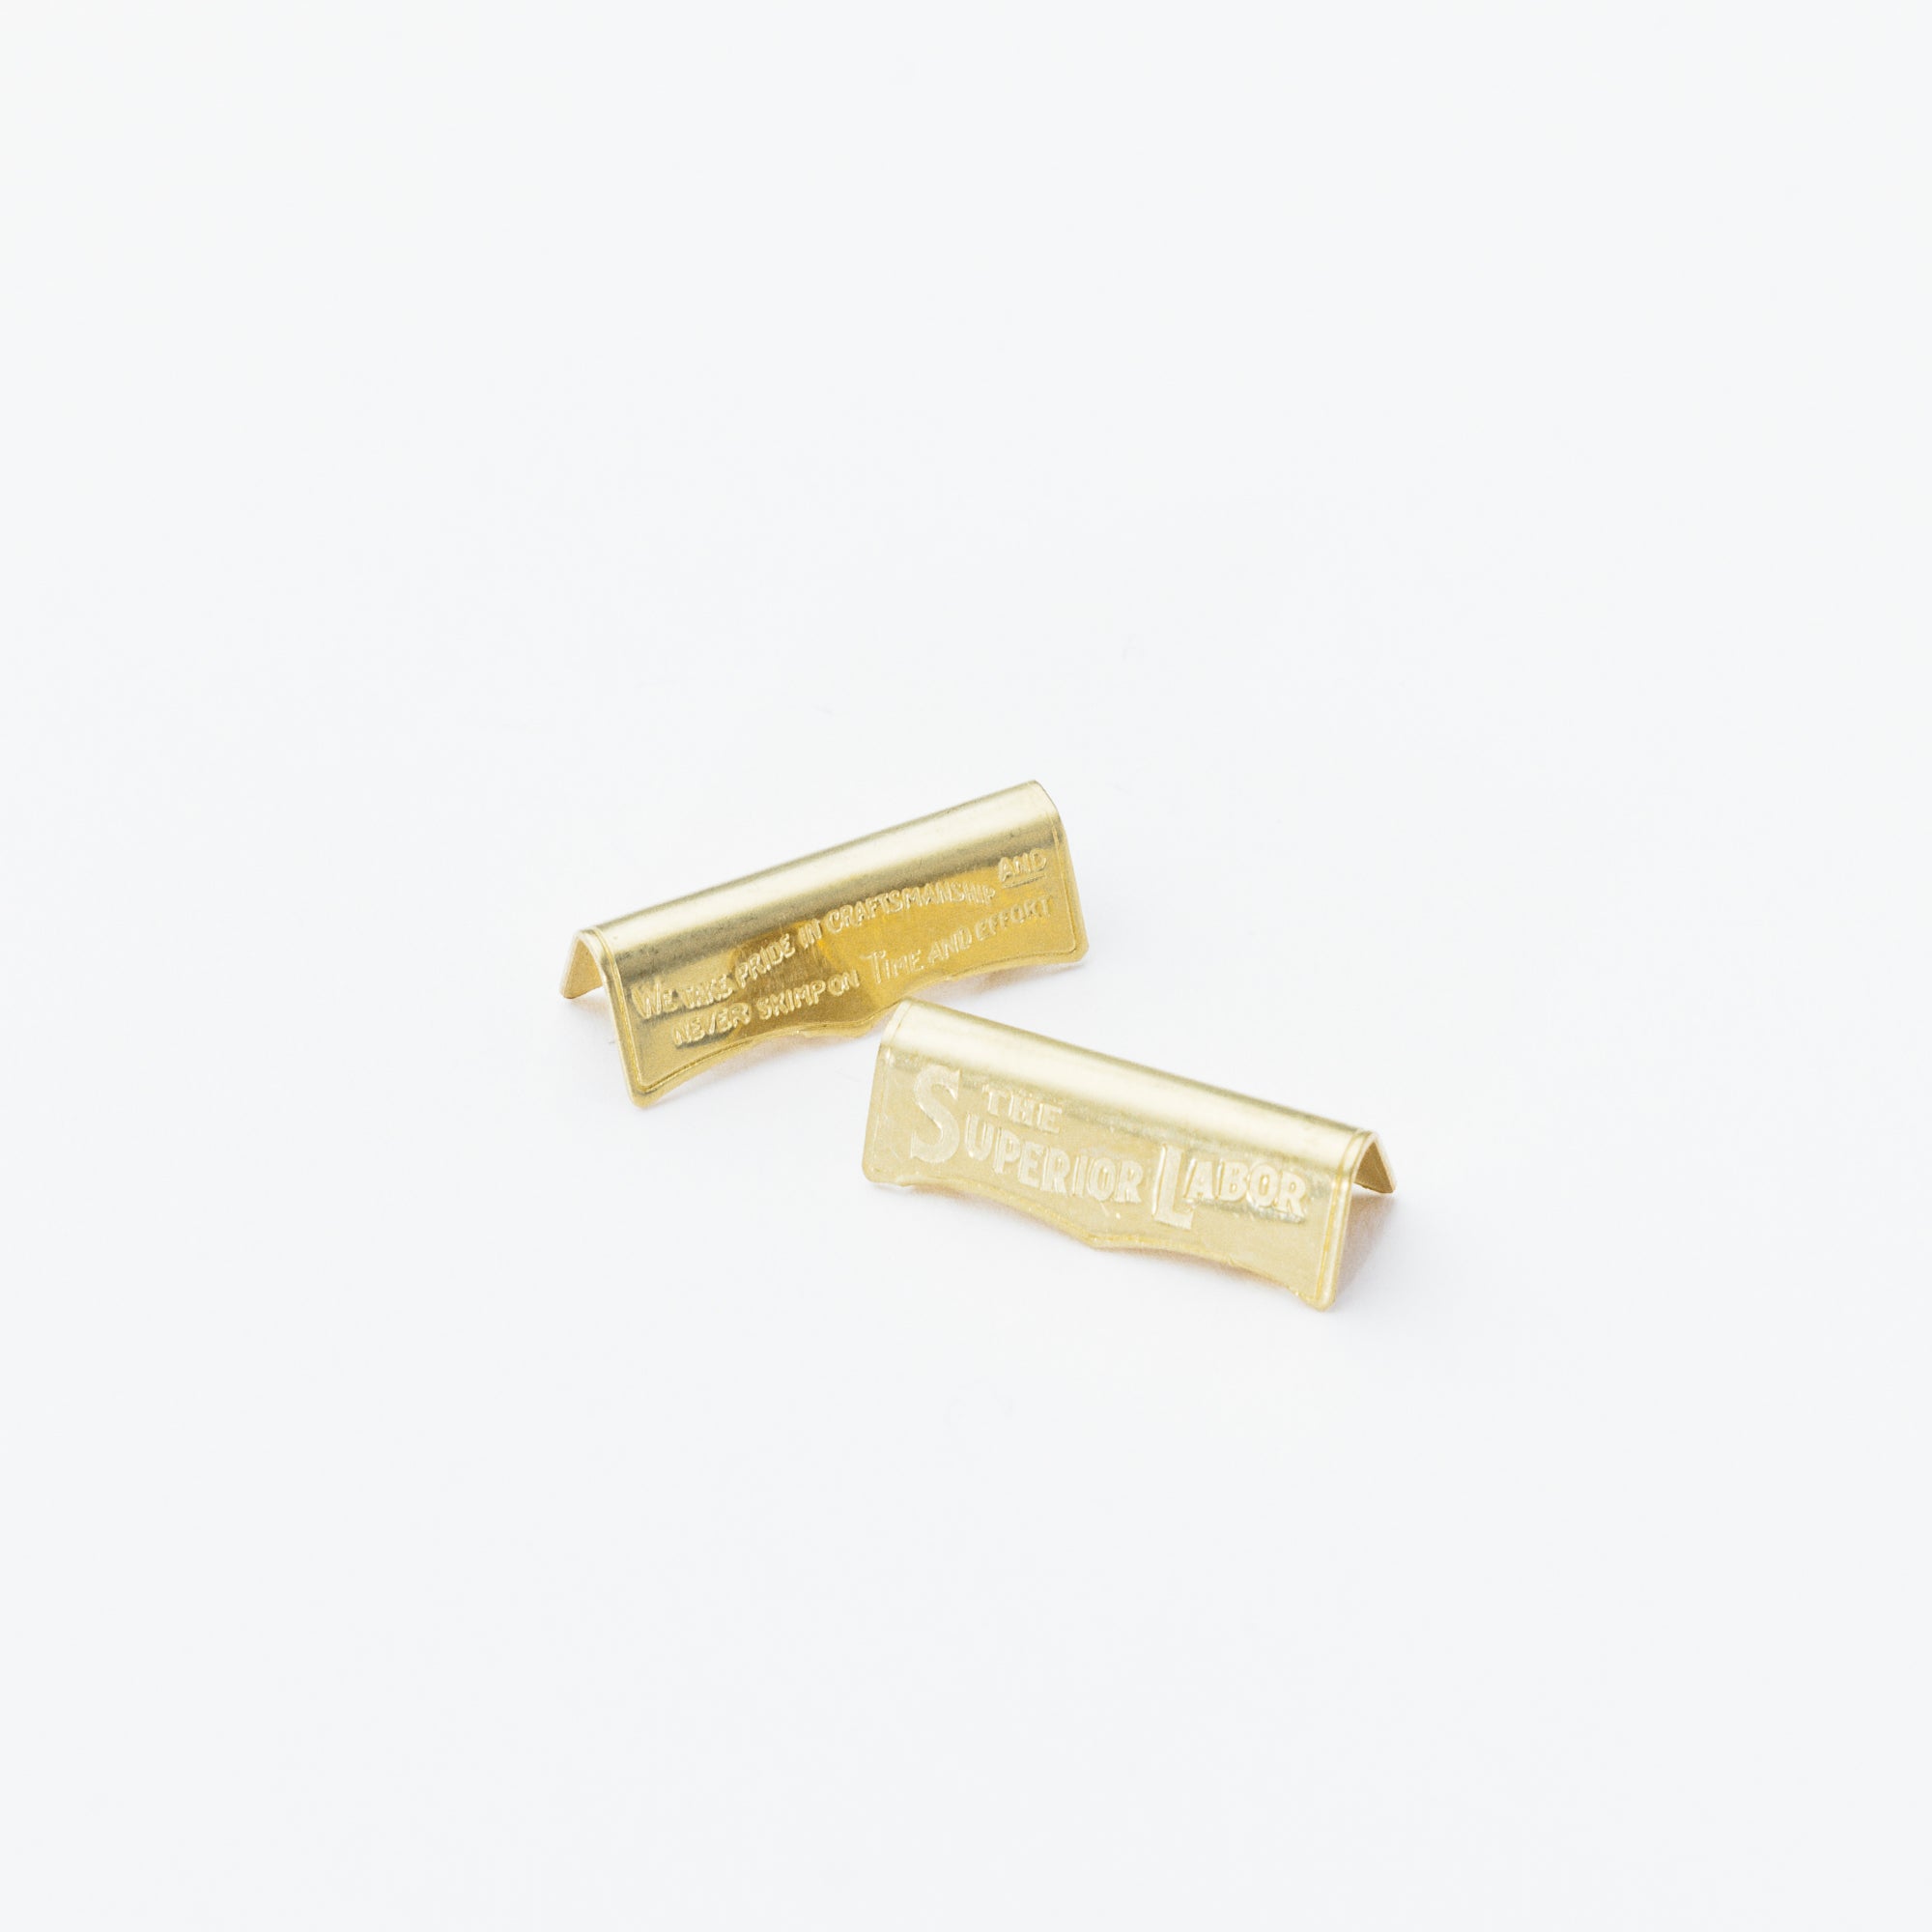 SL0069 brass tag